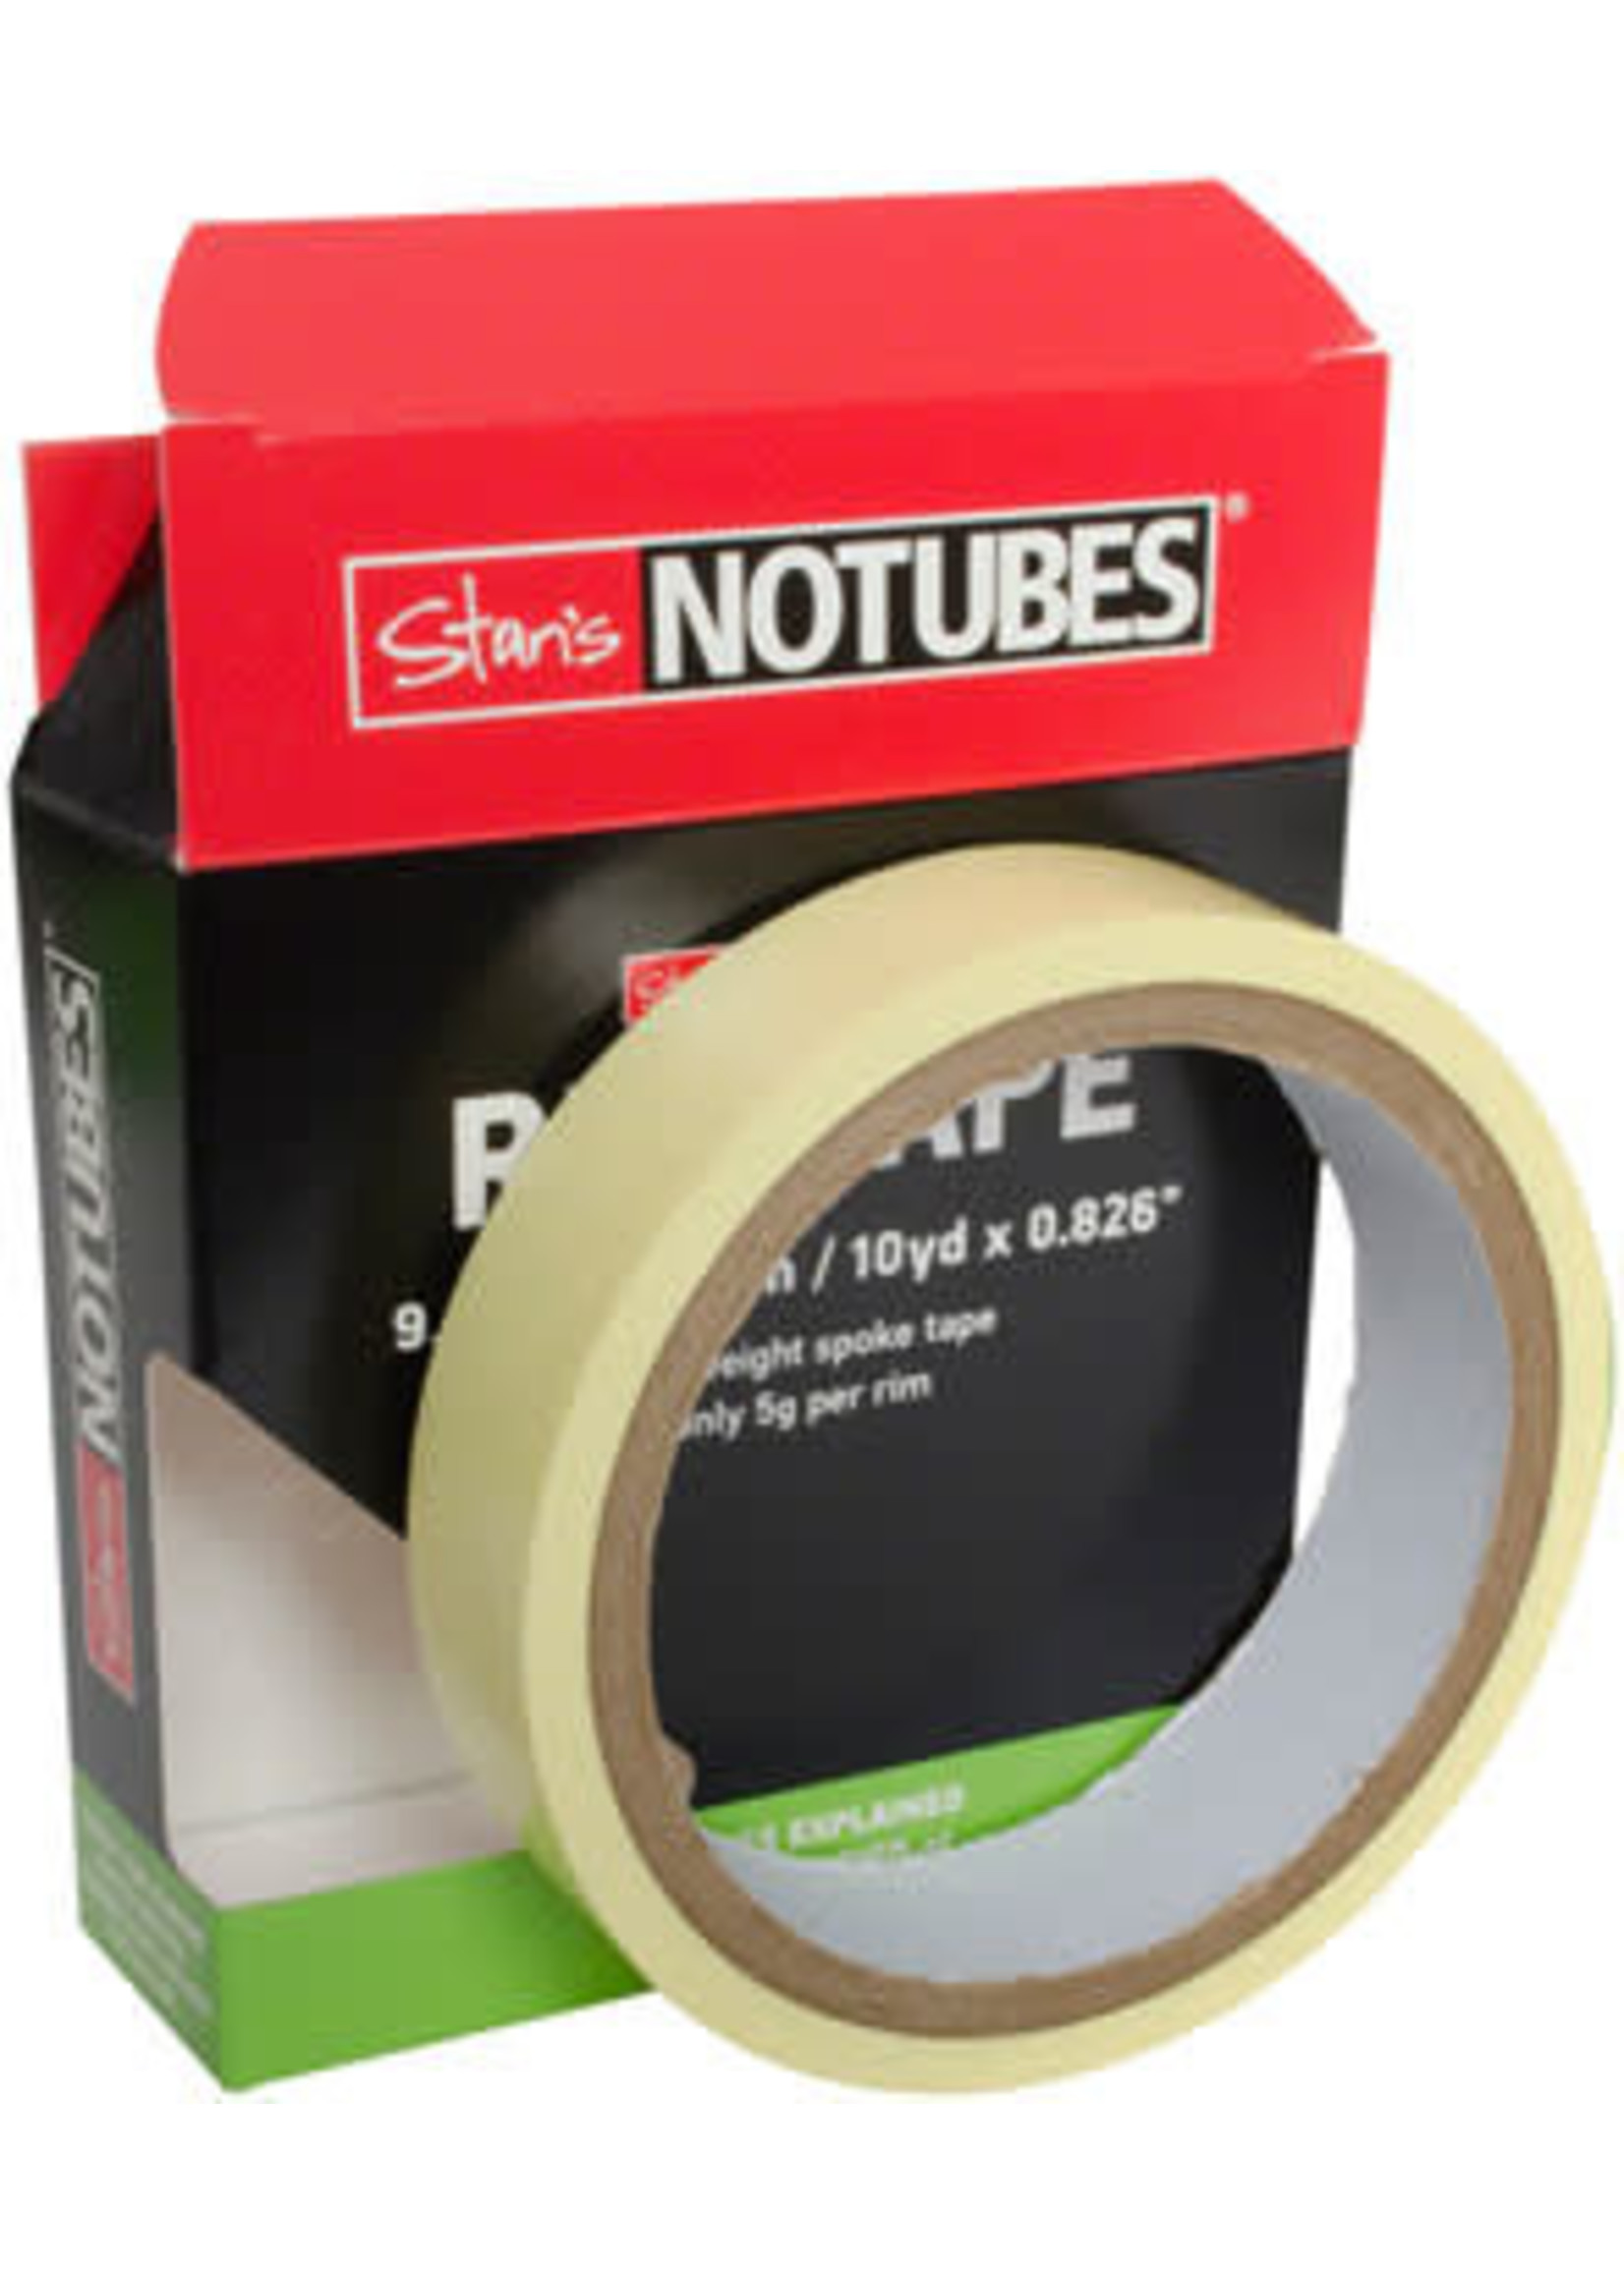 Stan's No-Tubes Stan's NoTubes Rim Tape: 21mm x 10 yard roll